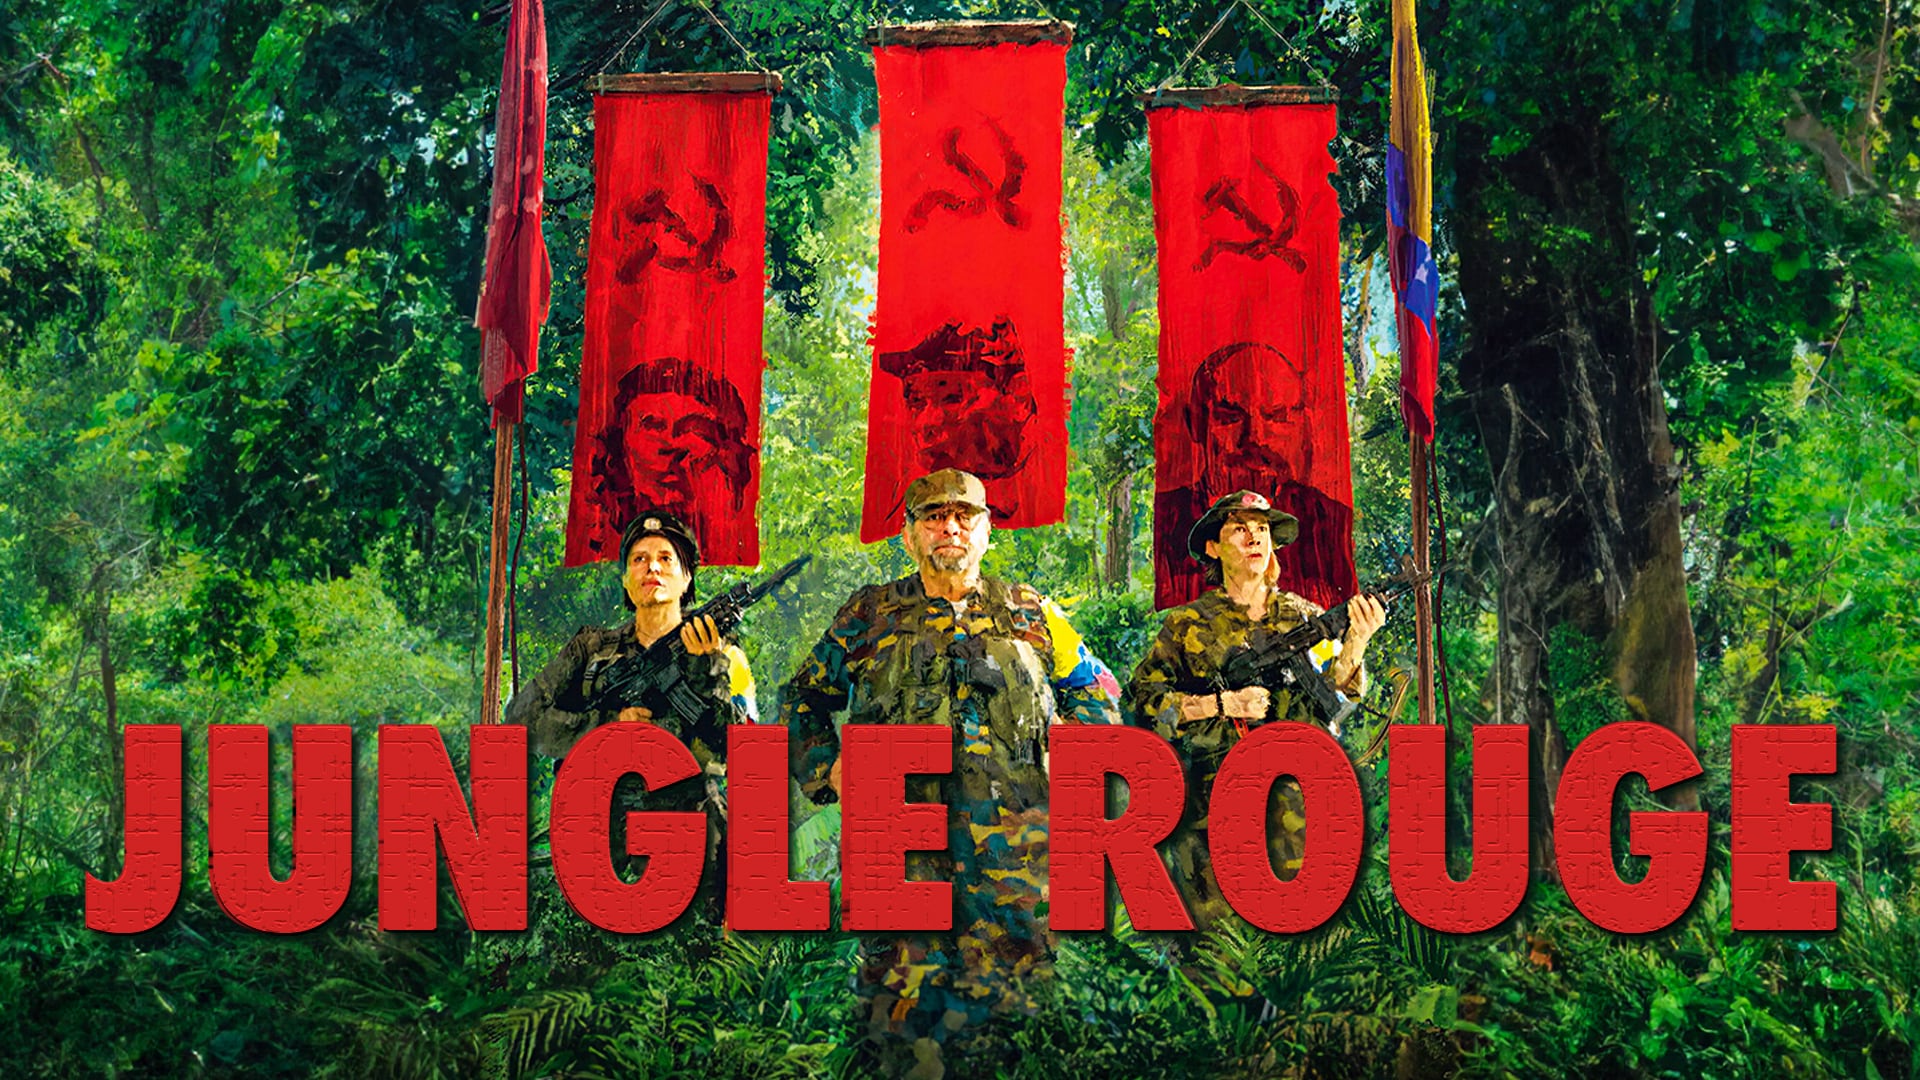 Jungle Rouge